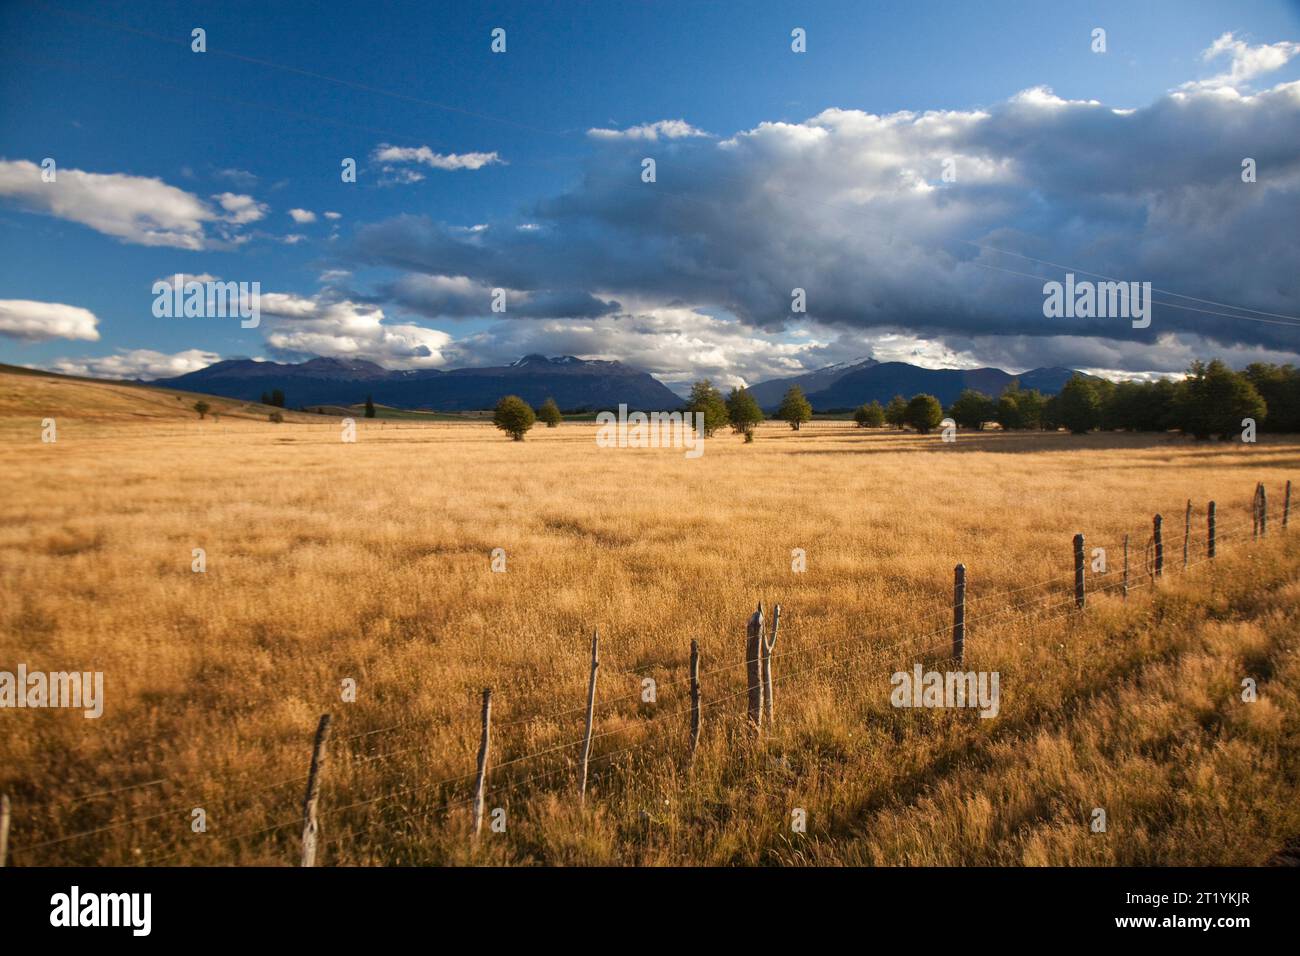 Landscape from the Carretera Austral near Coihaique. Stock Photo